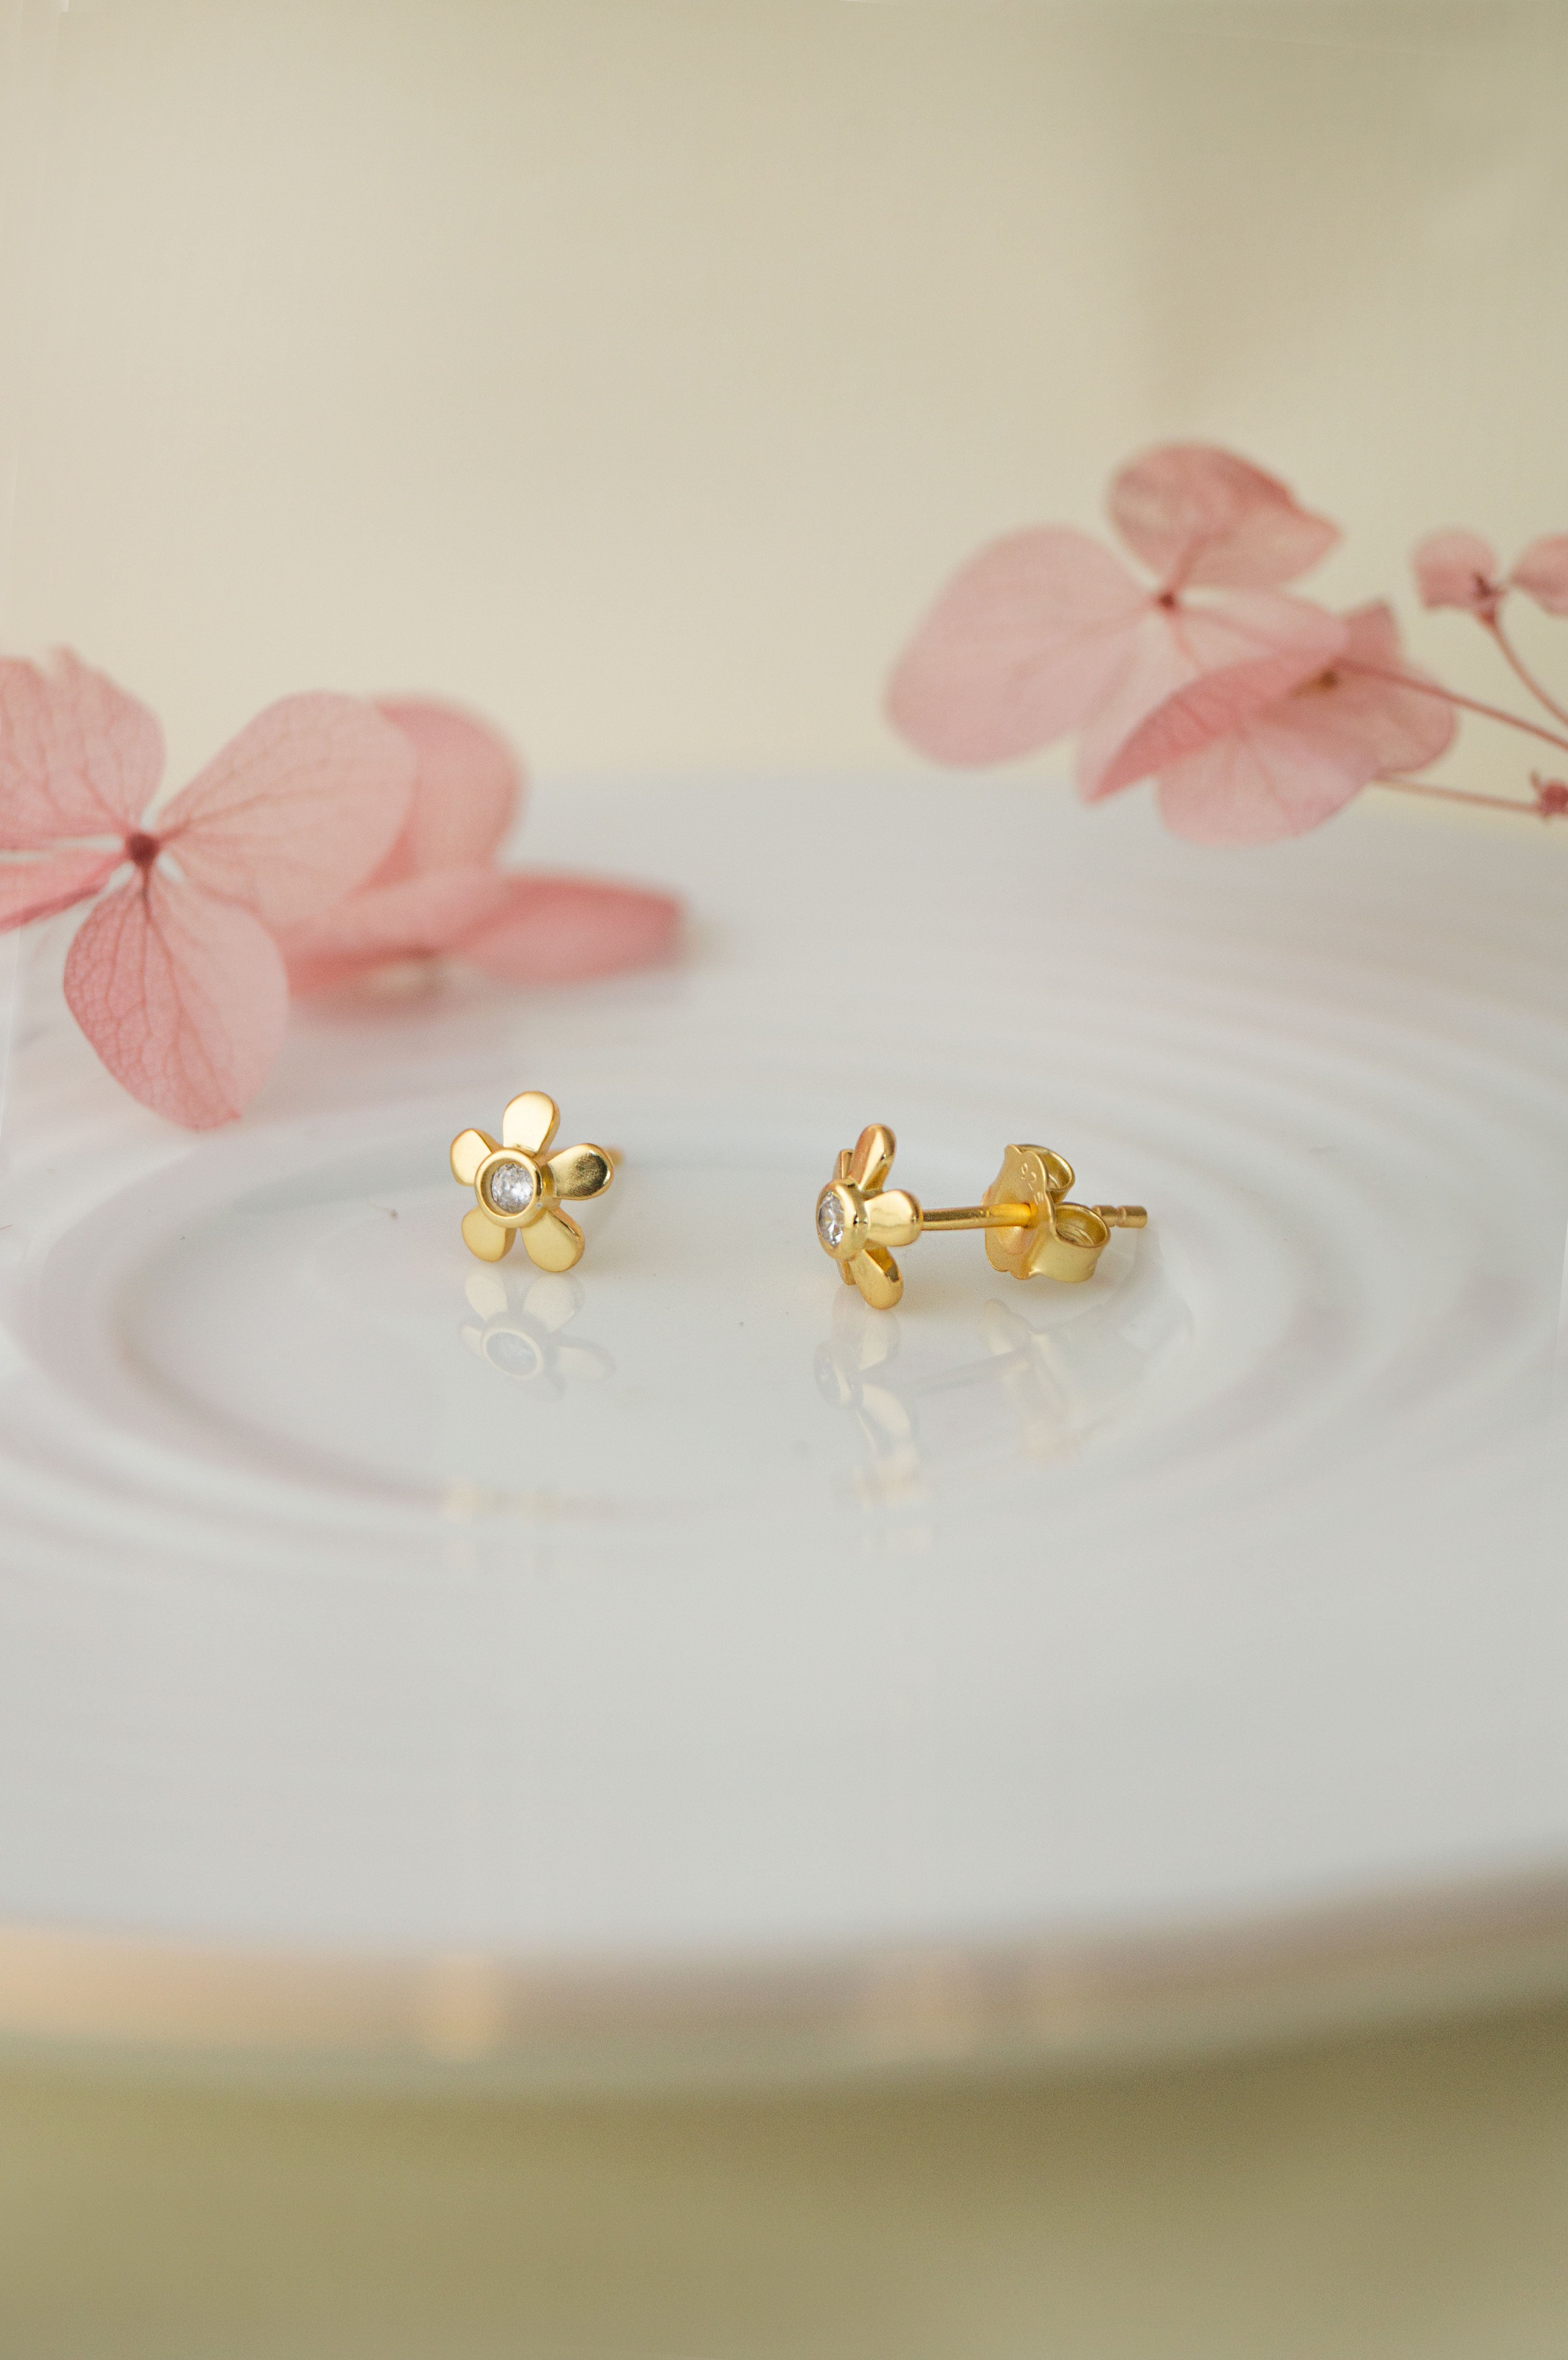 Buy Cute Gold Circle Hoop Earrings Light Weight Plain Screw Bali Earrings  for Girls